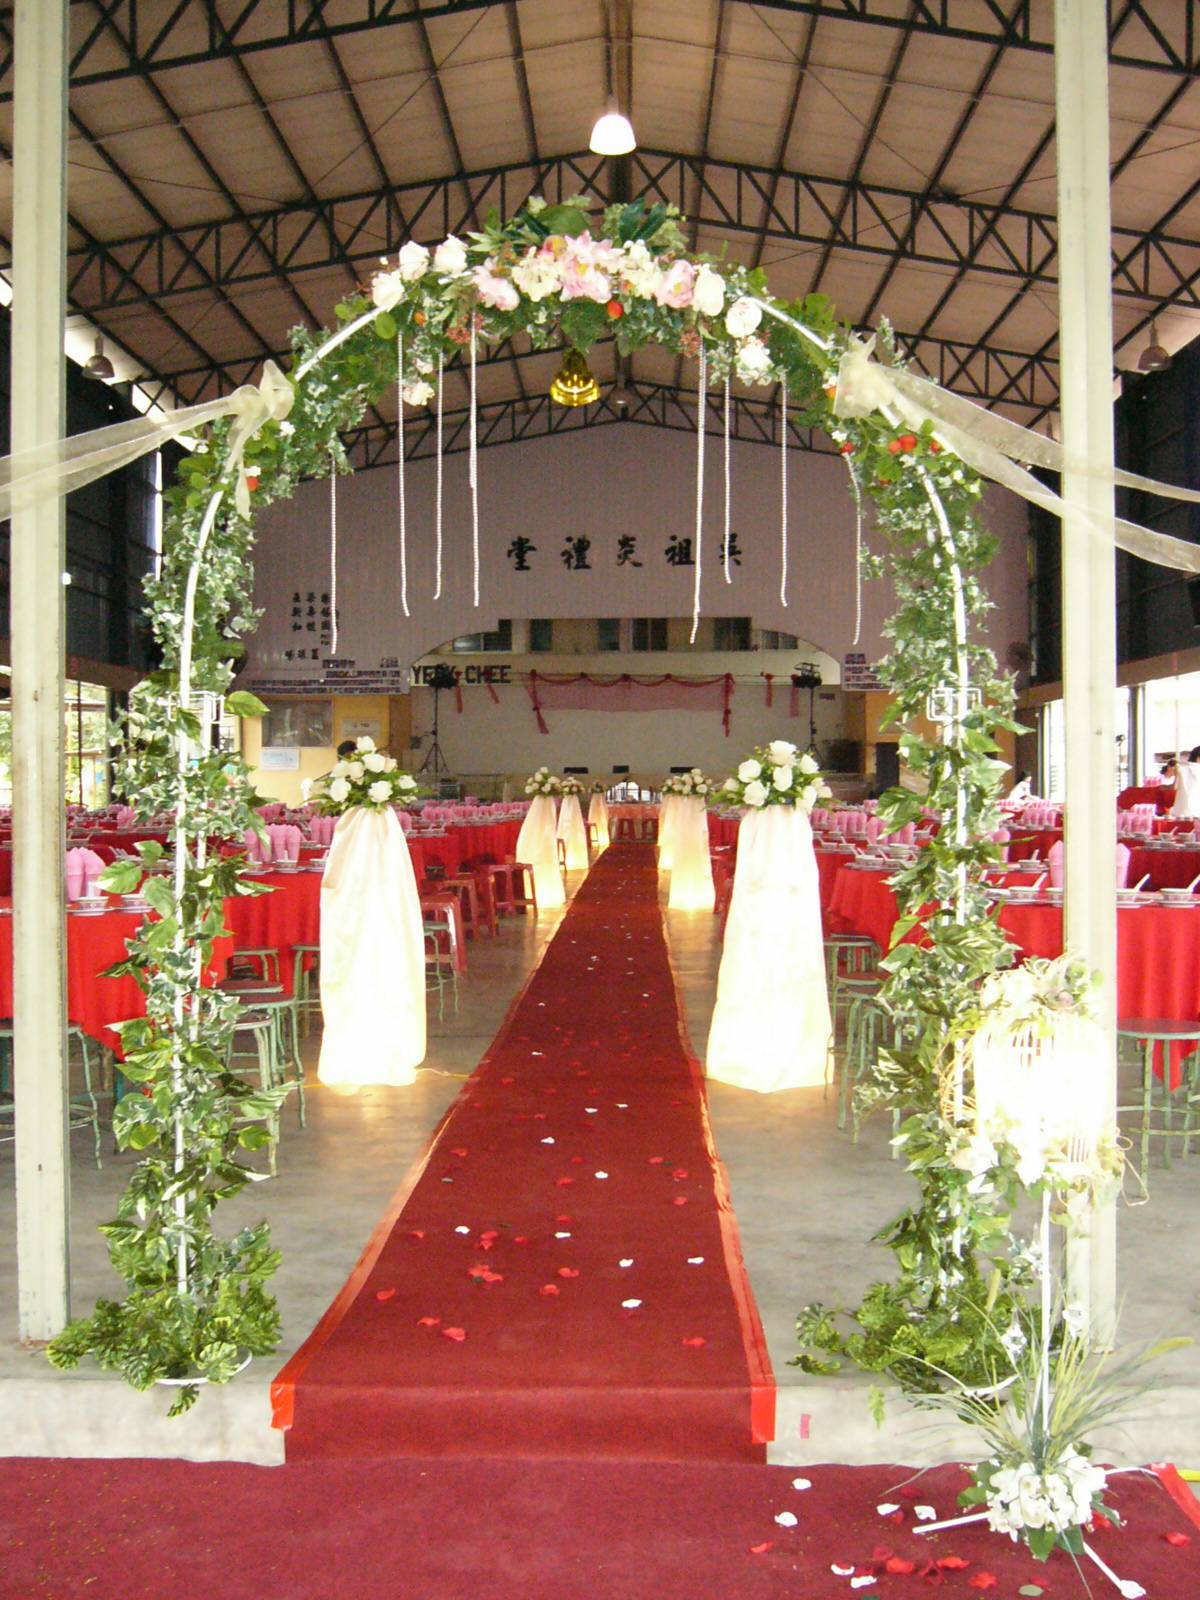 25 Beautiful Wedding Hall Decorations Ideas - Wohh Wedding